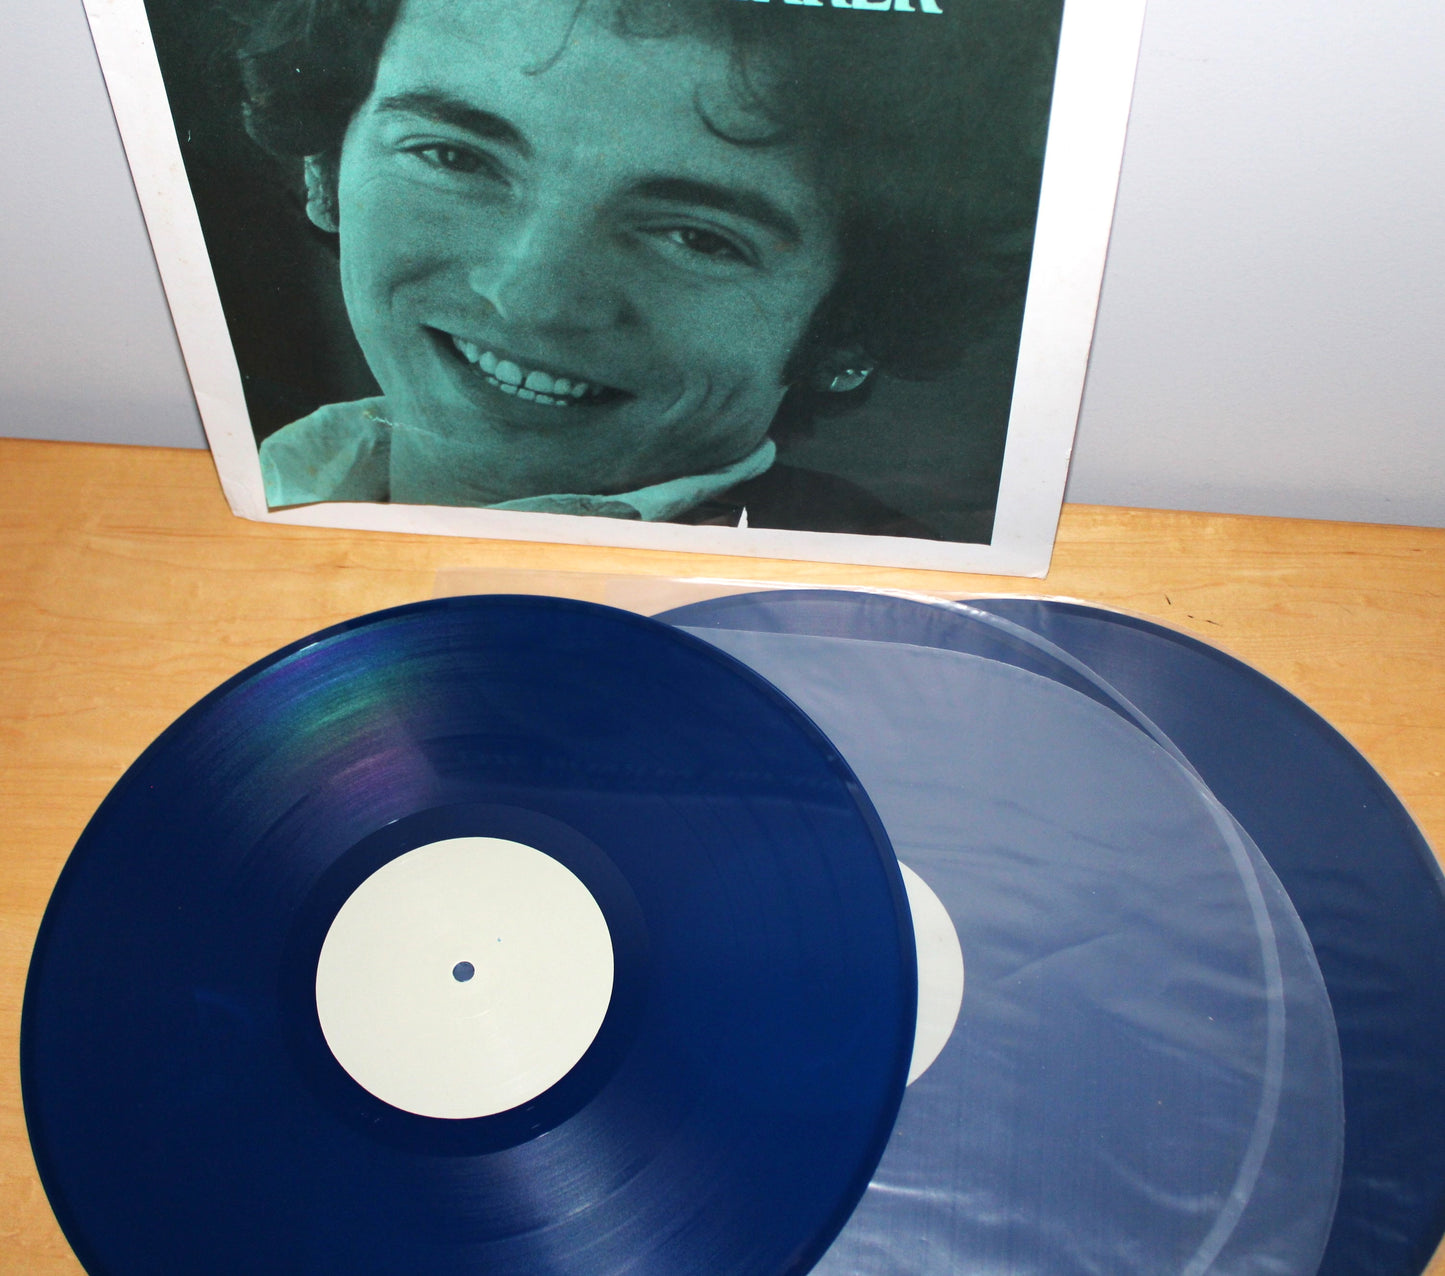 Bruce Springsteen – The Boston Breaker – Unofficial blue color Vinyl 3LPs, rare find for Boston fans!